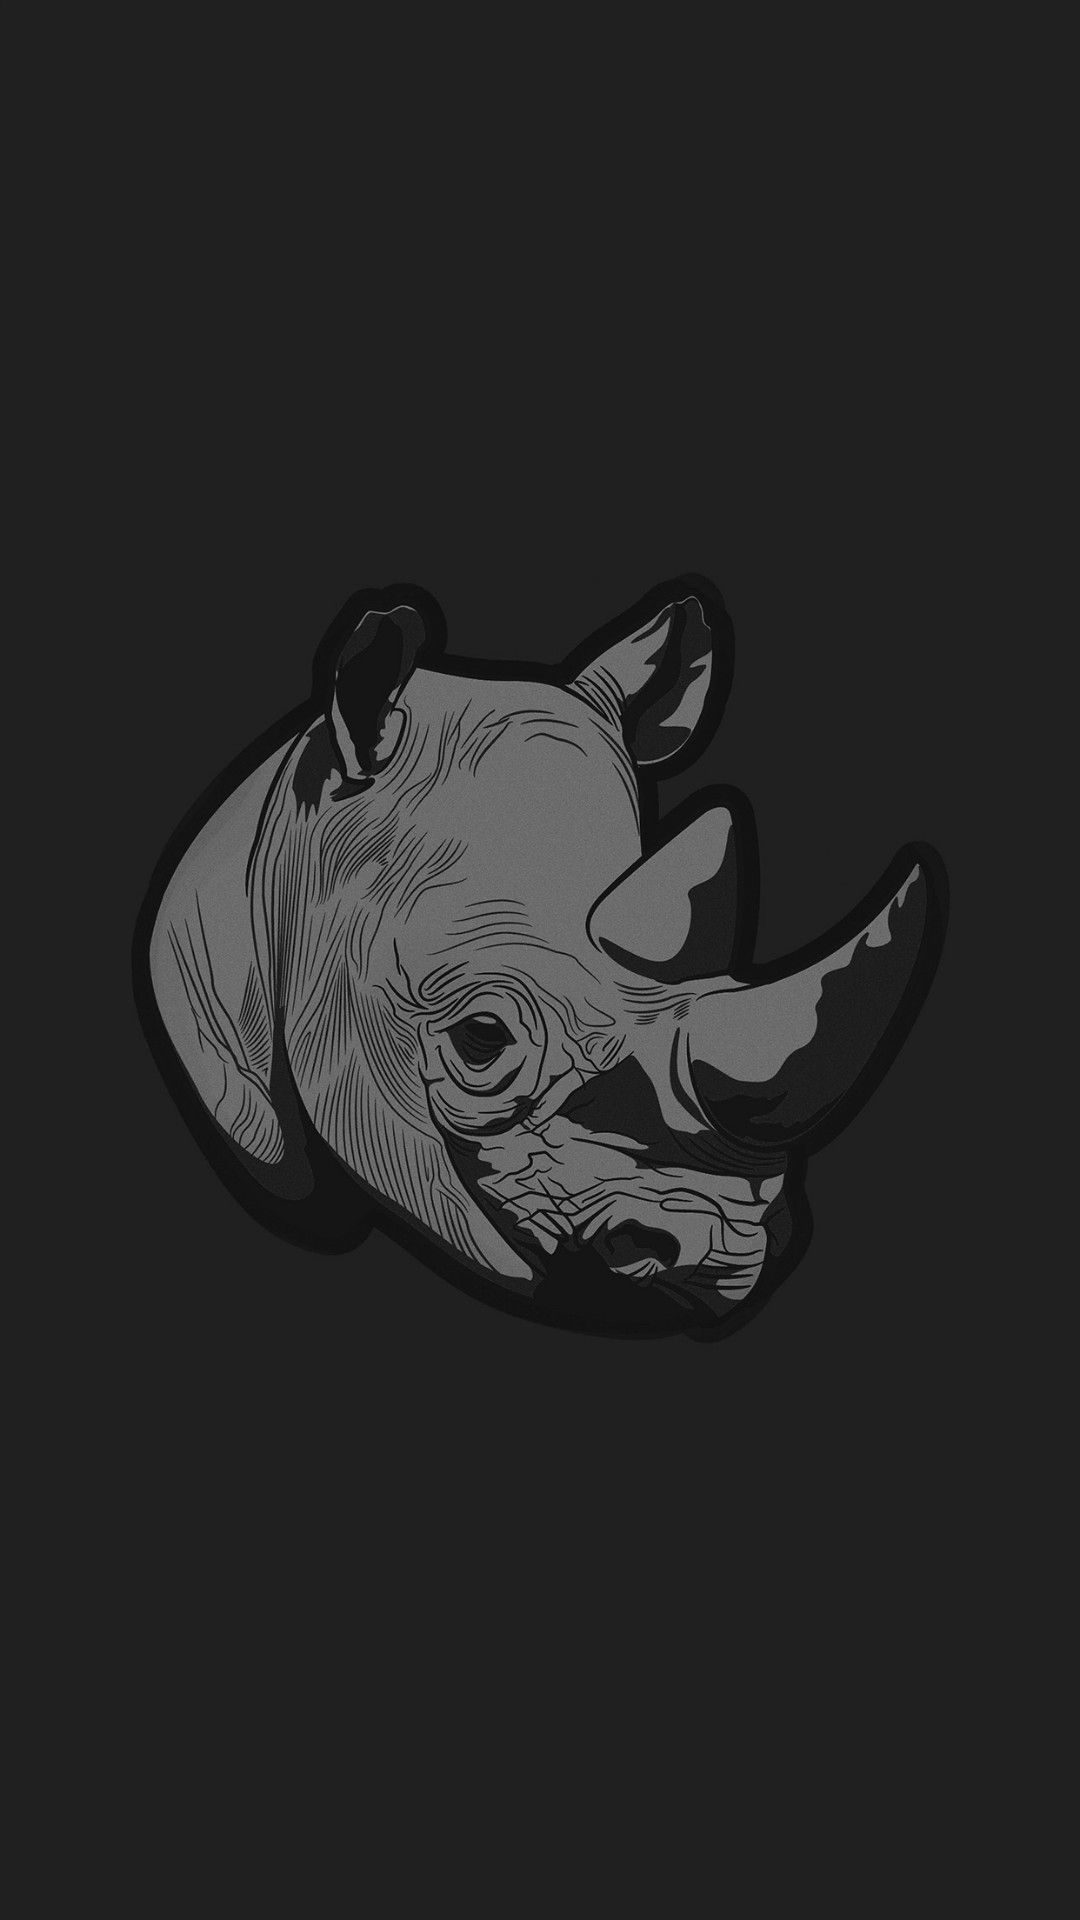 Thoughtful Rhino Dark Minimal Illust Art iPhone 8 Wallpaper Free